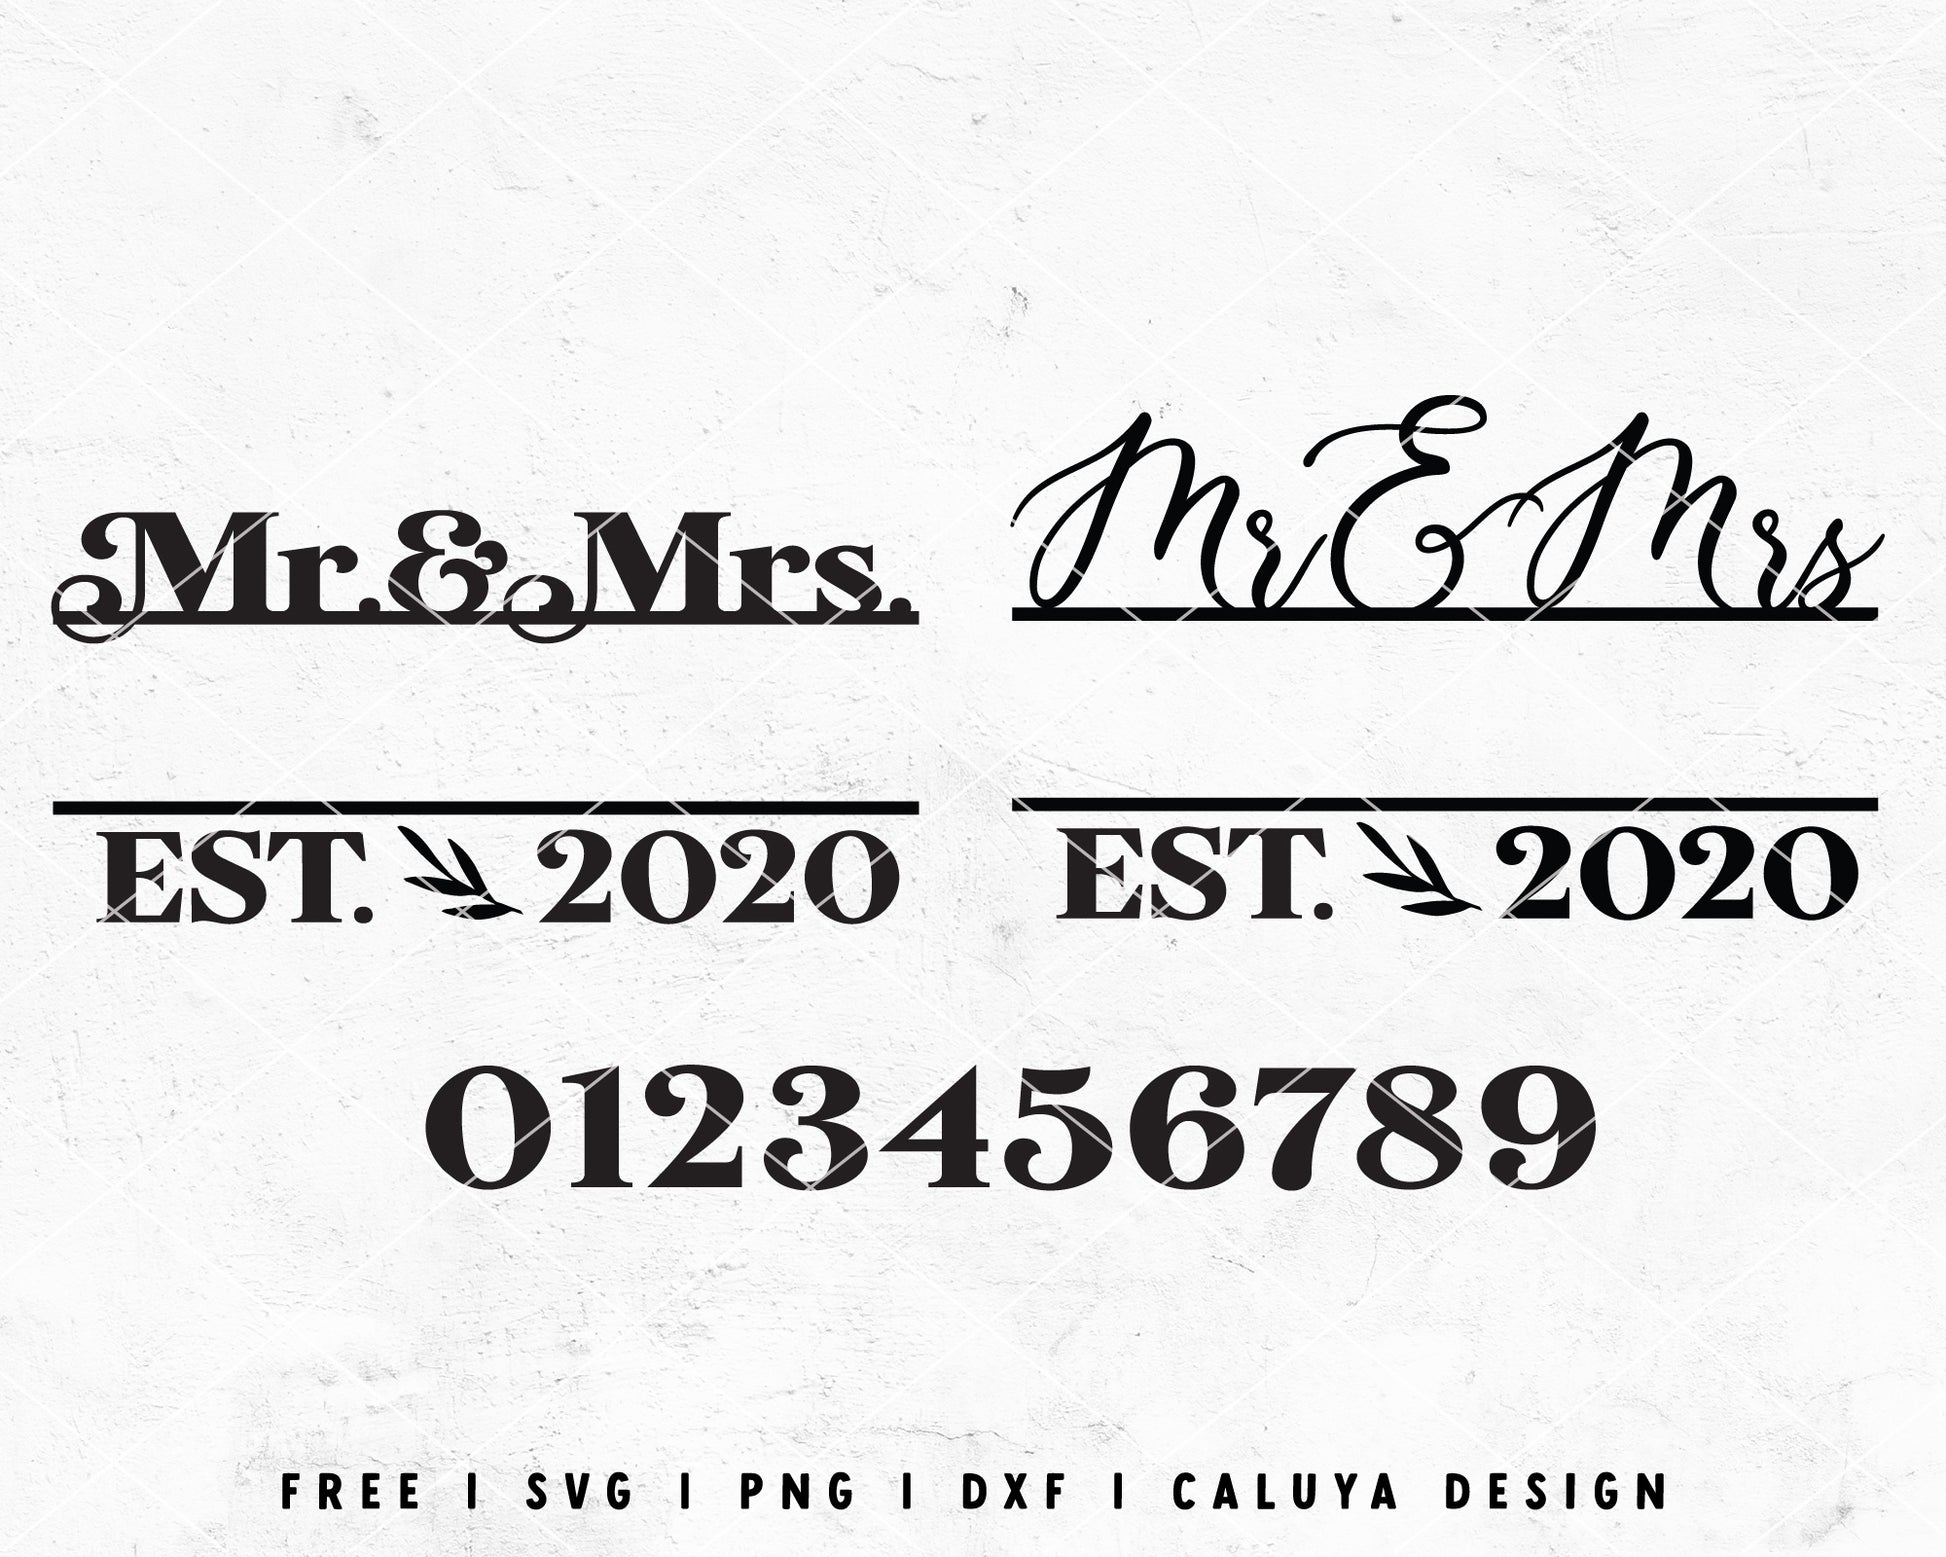 FREE Mr. & Mrs. Monogram SVG Cut File for Cricut, Cameo Silhouette | Free SVG Cut File